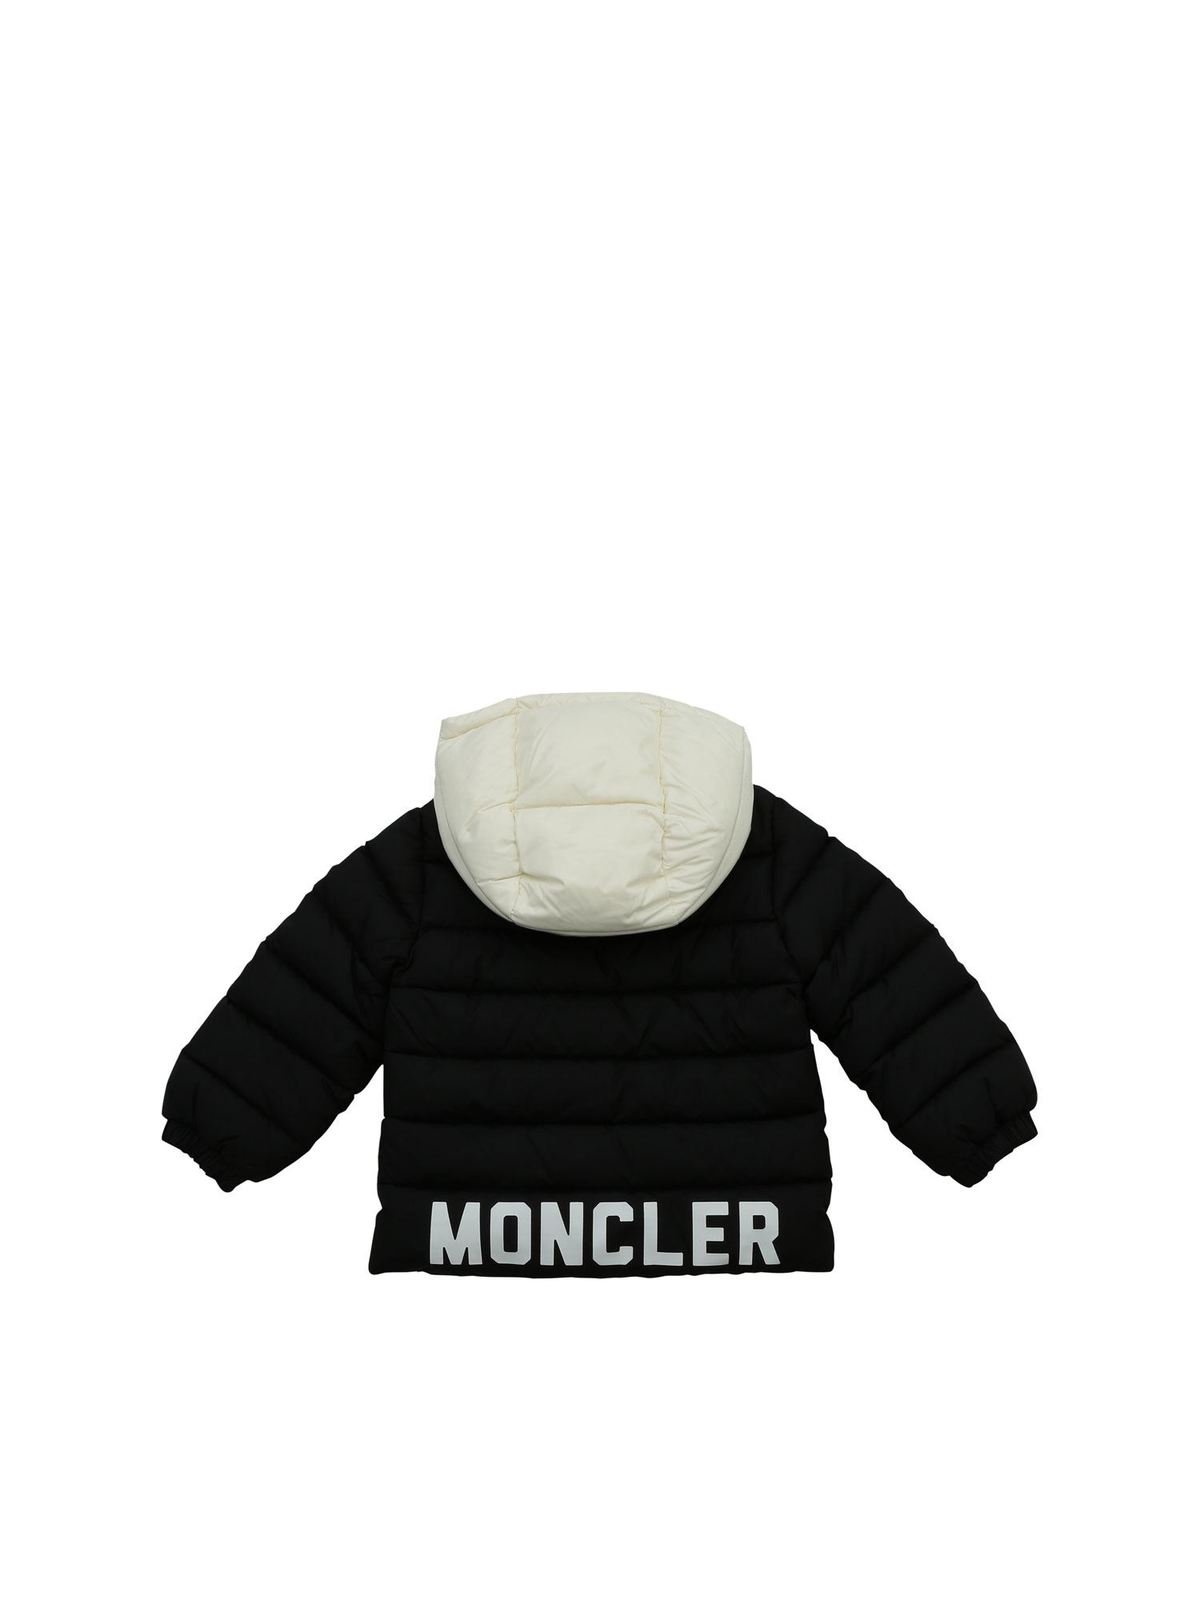 moncler cream coat